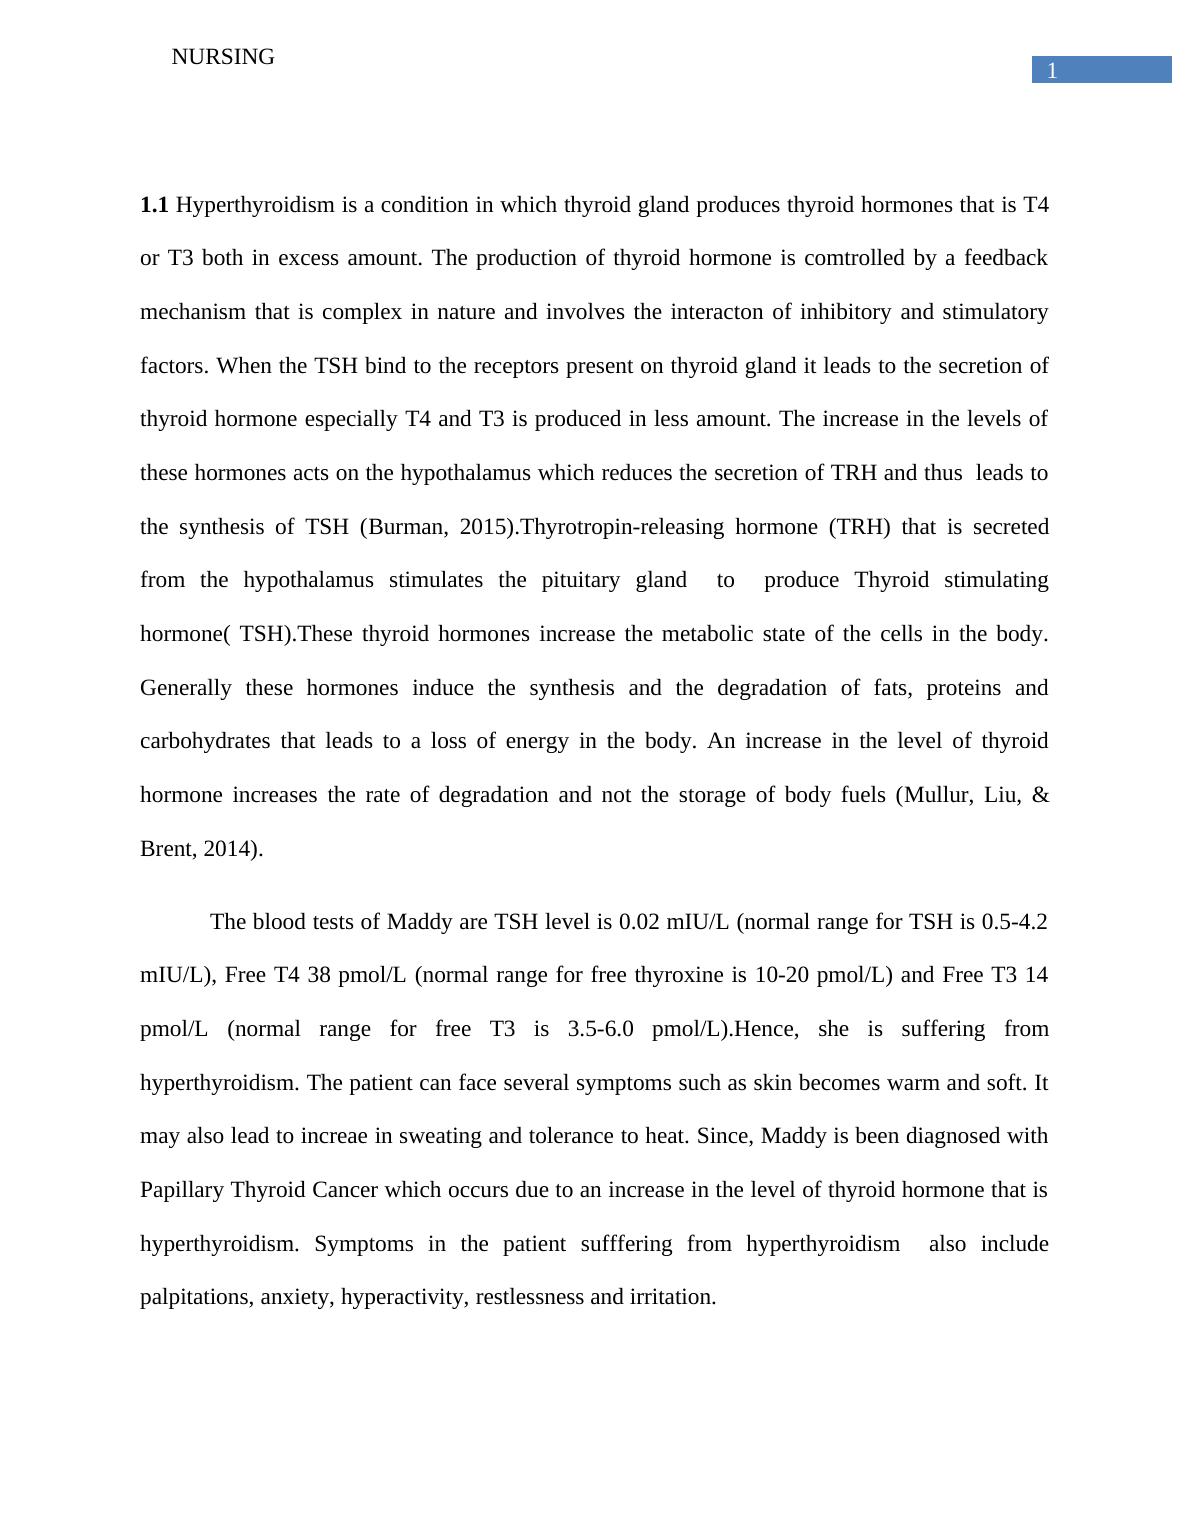 Document on Hyperthyroidism - NUR2212 - Miami Dade College_2